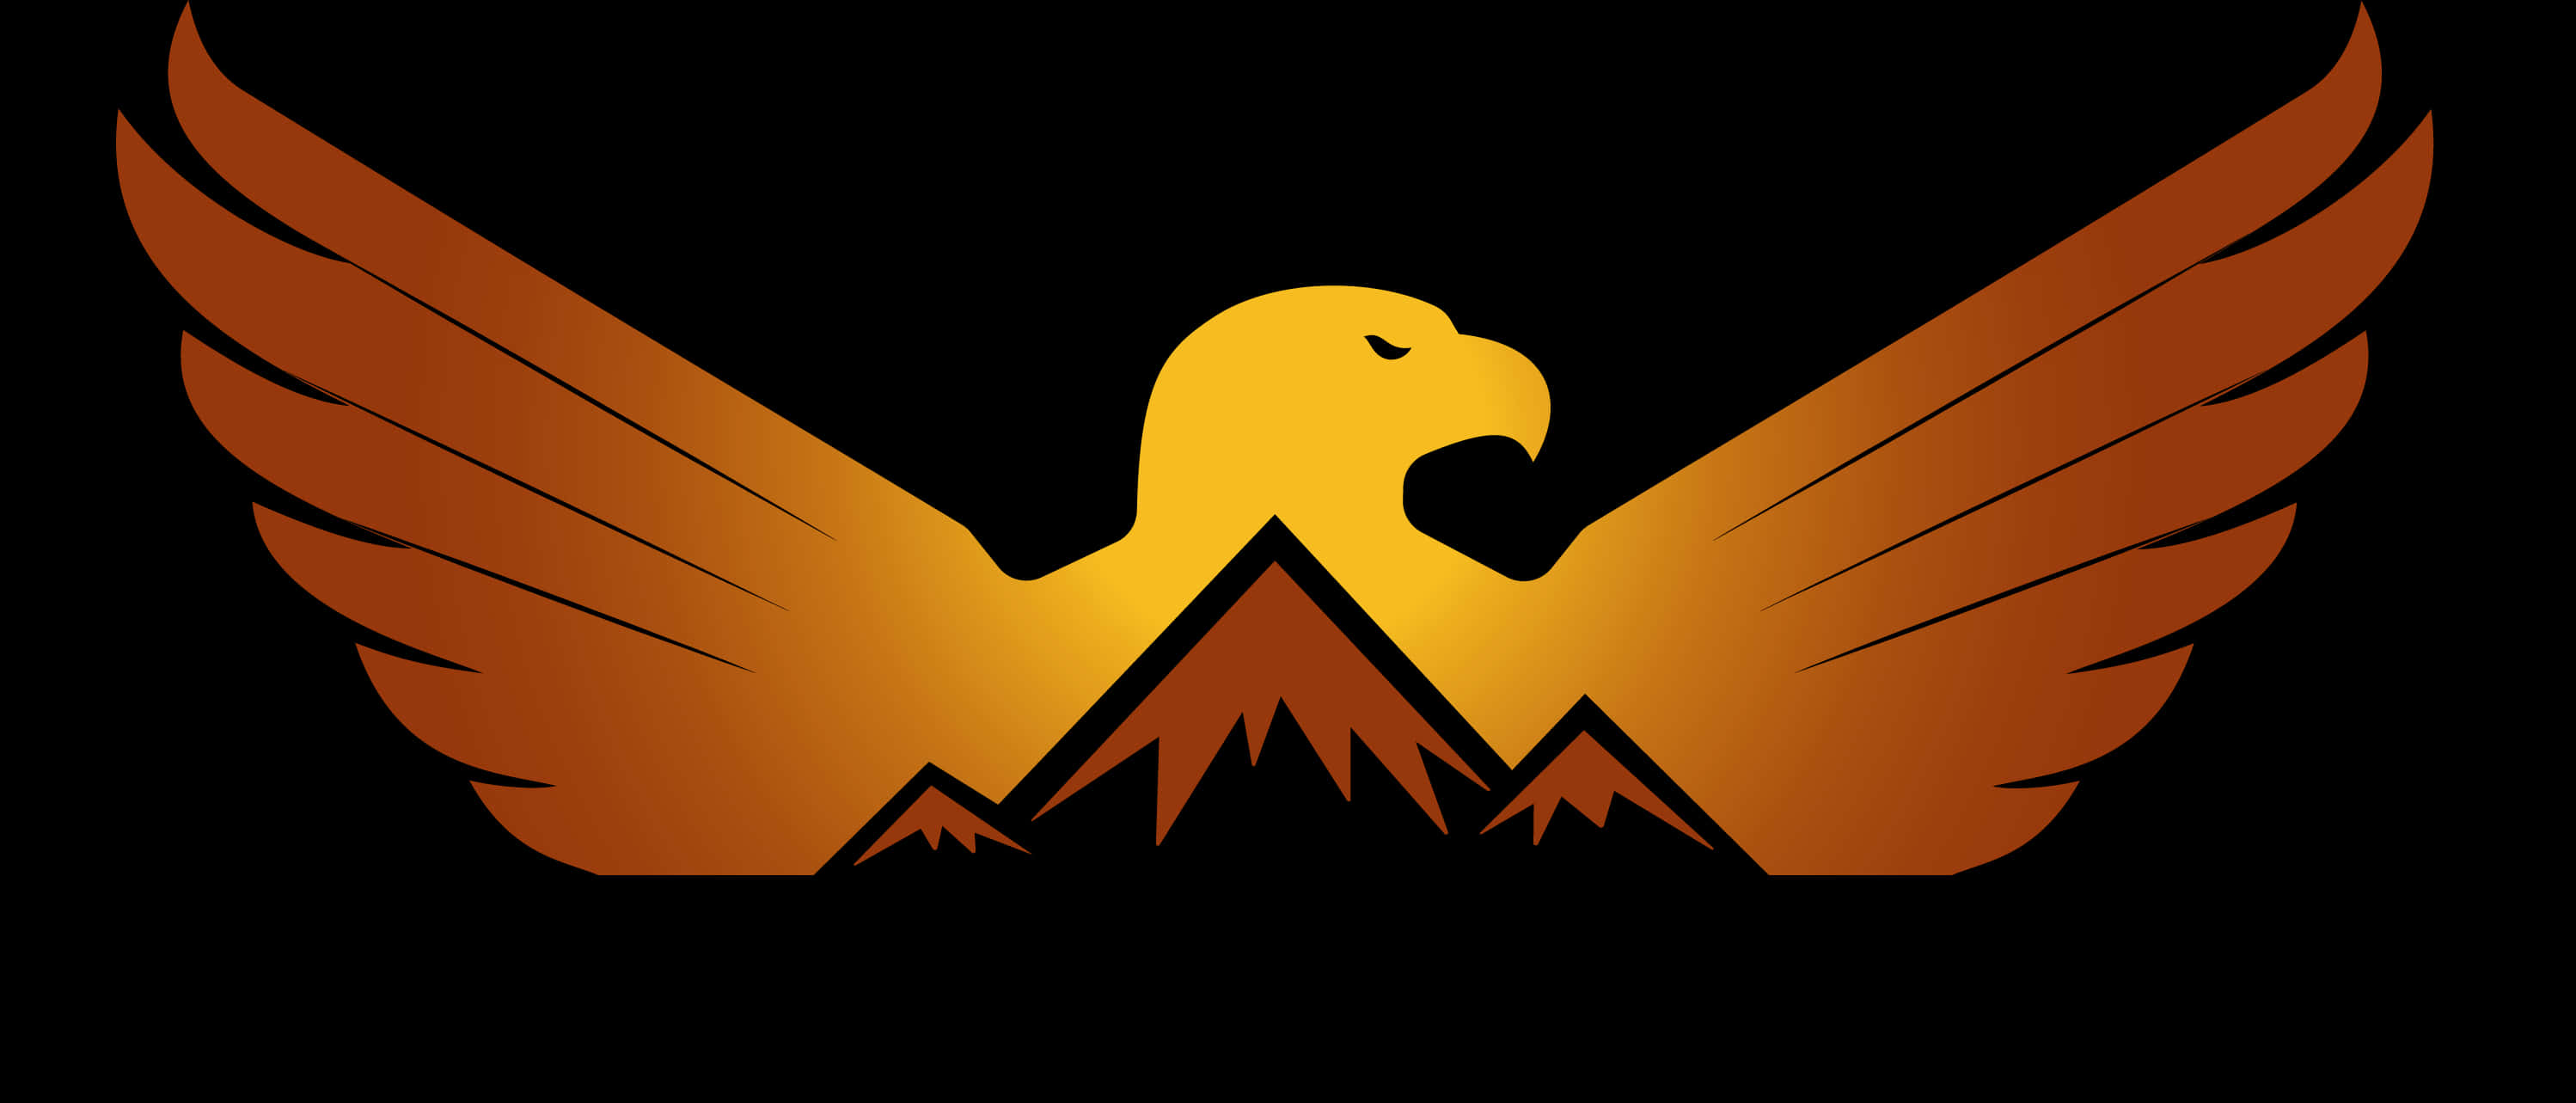 Golden Eagle Silhouette Logo PNG image